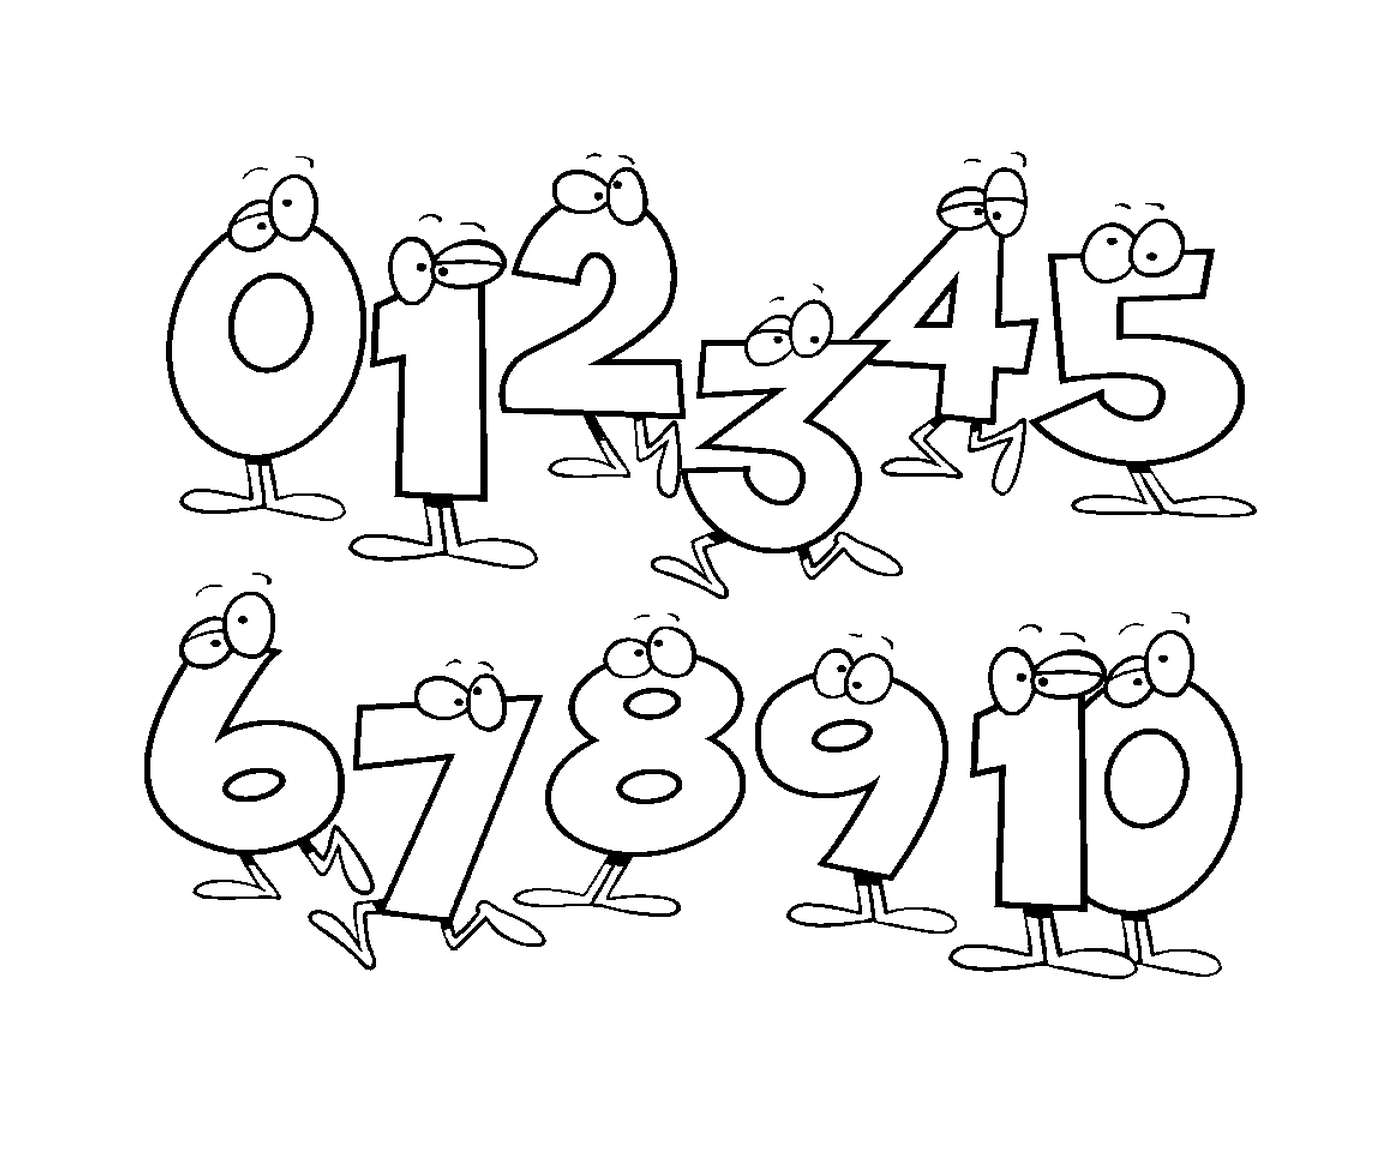  Conjunto de números dibujados caricaturamente de cero a diez 